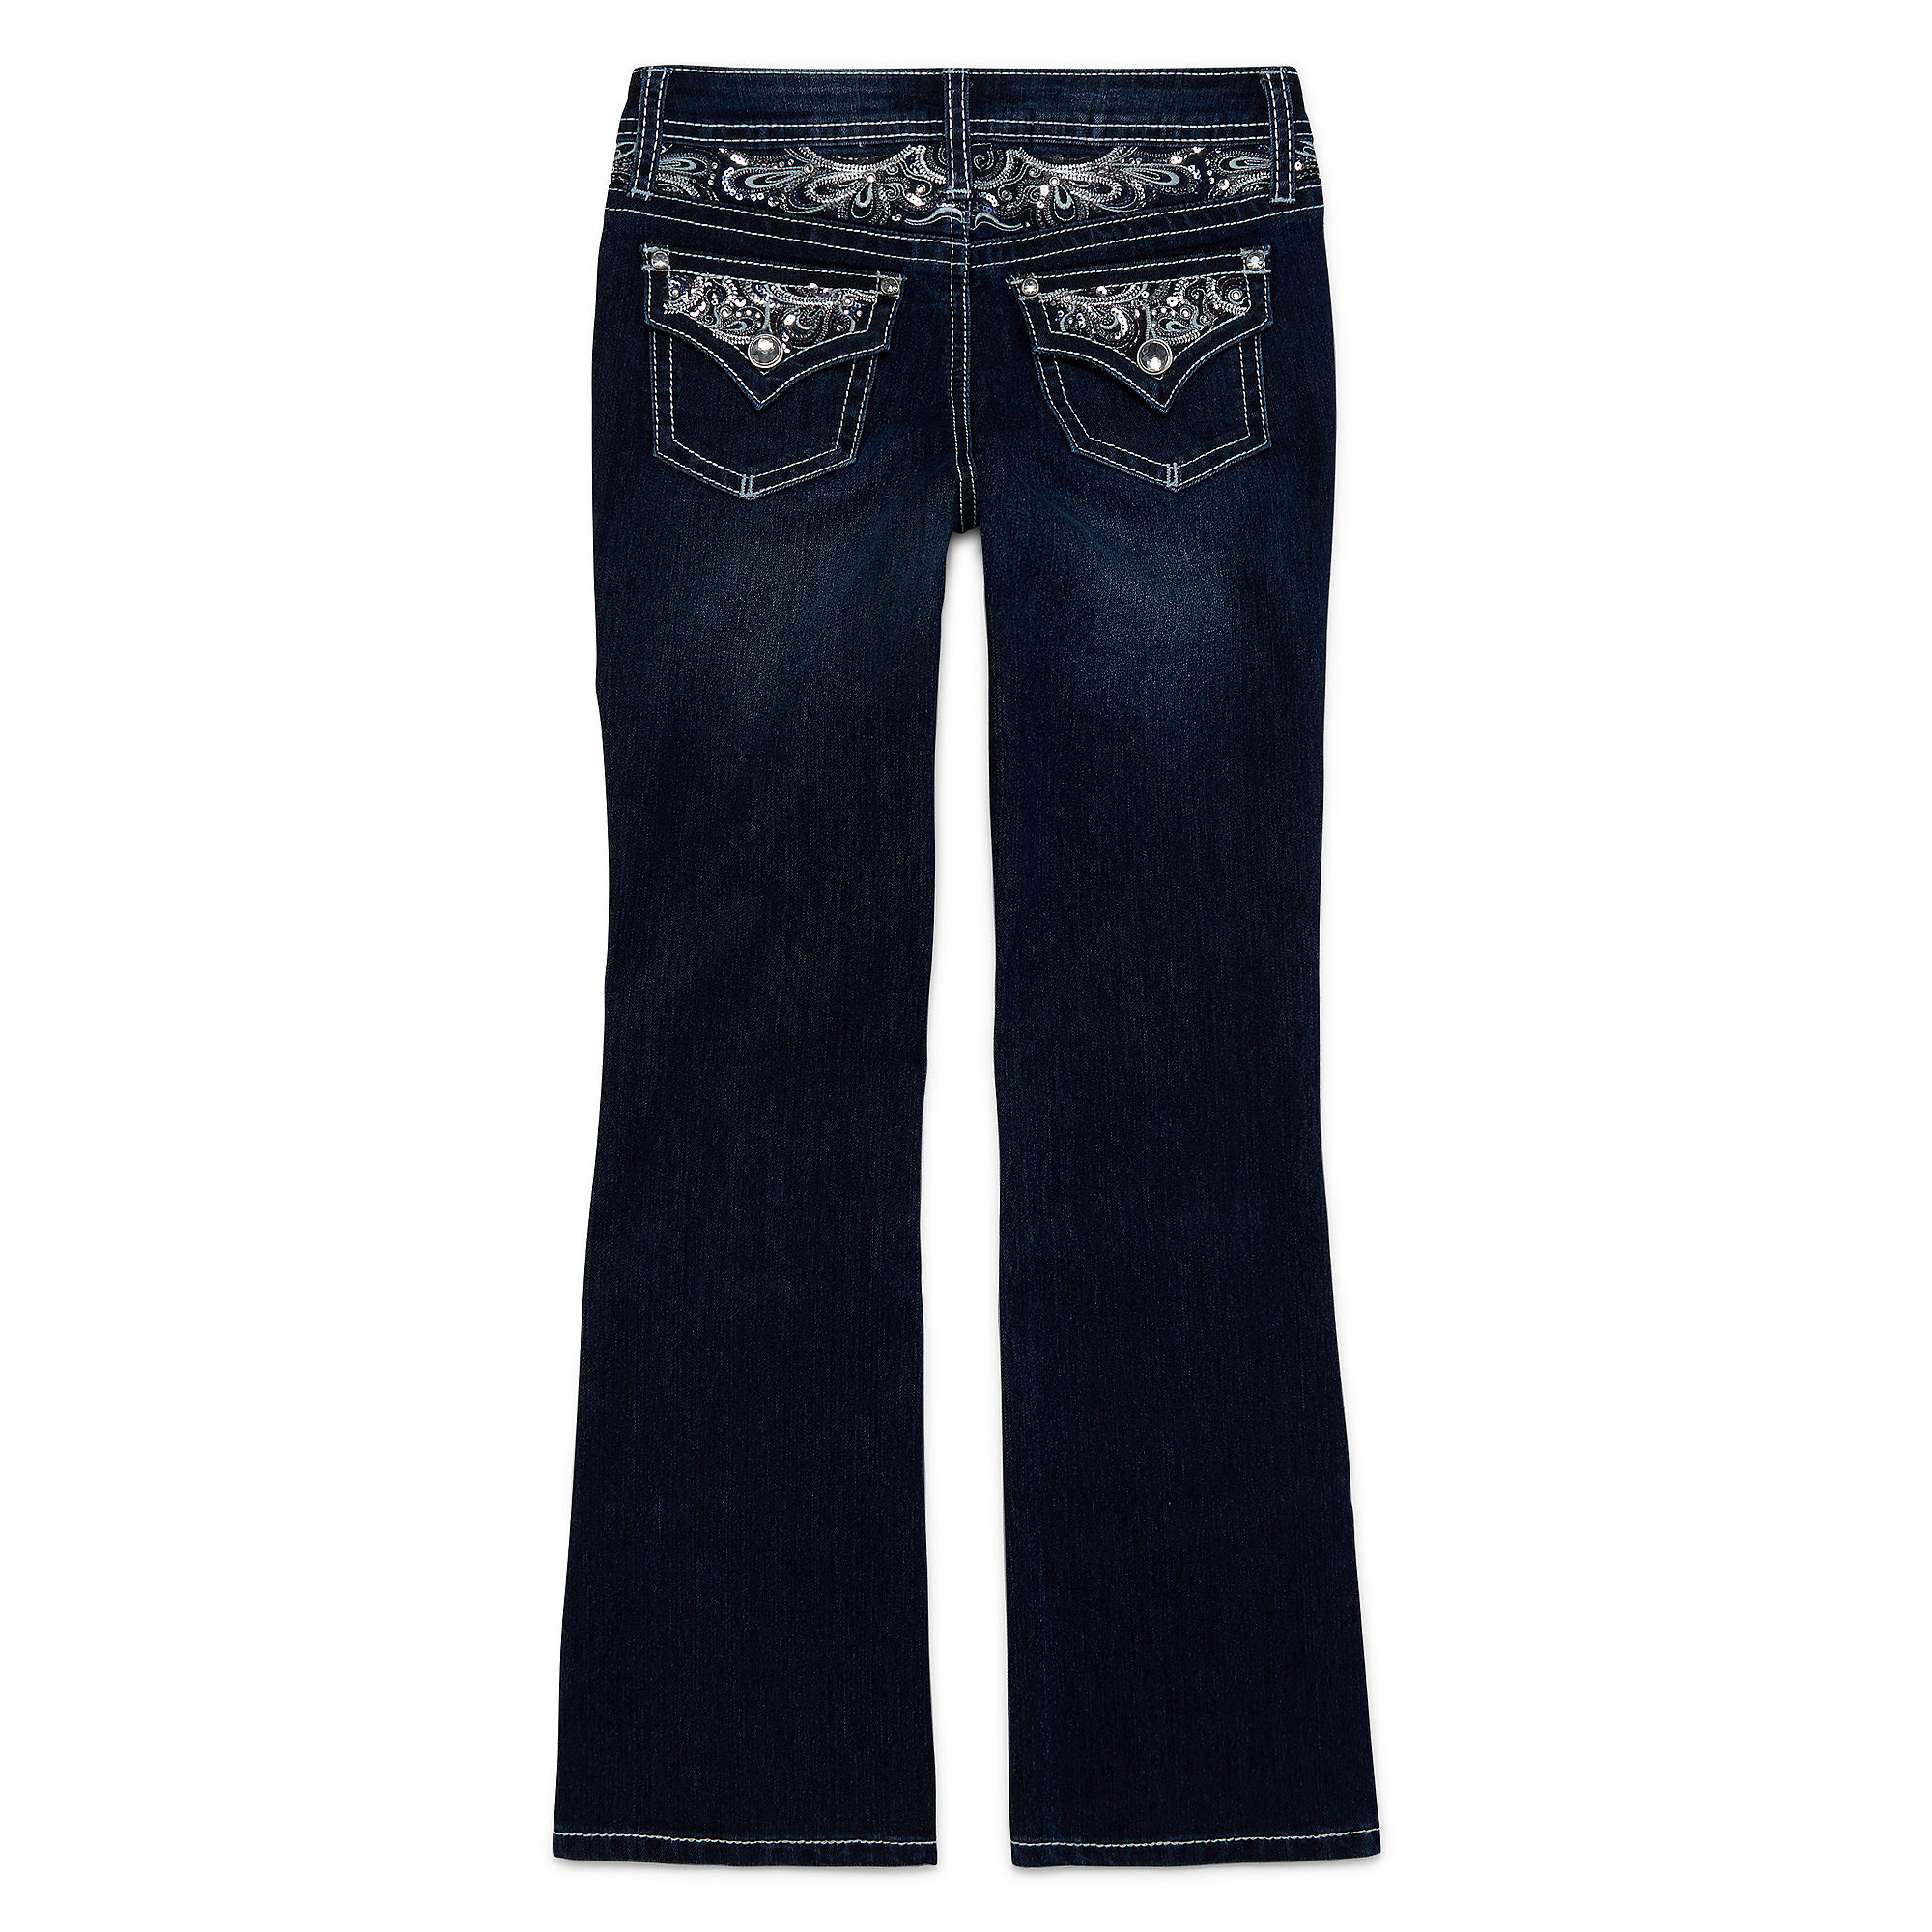 Girls Jeans - Sizes 7 - 16 | Jeans Hub